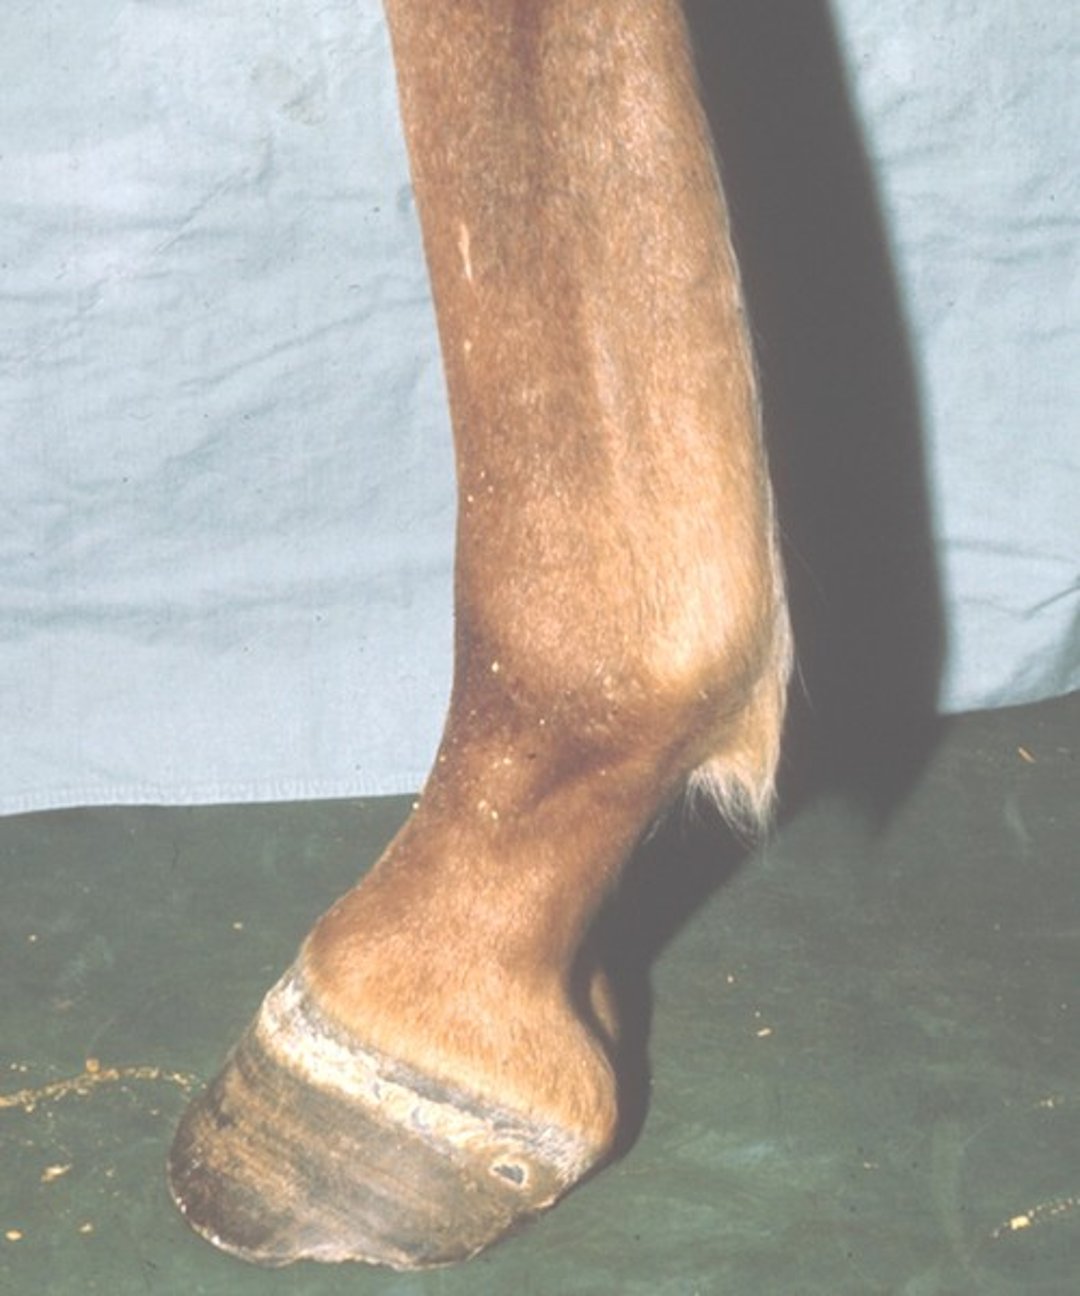 Bowed tendon, horse